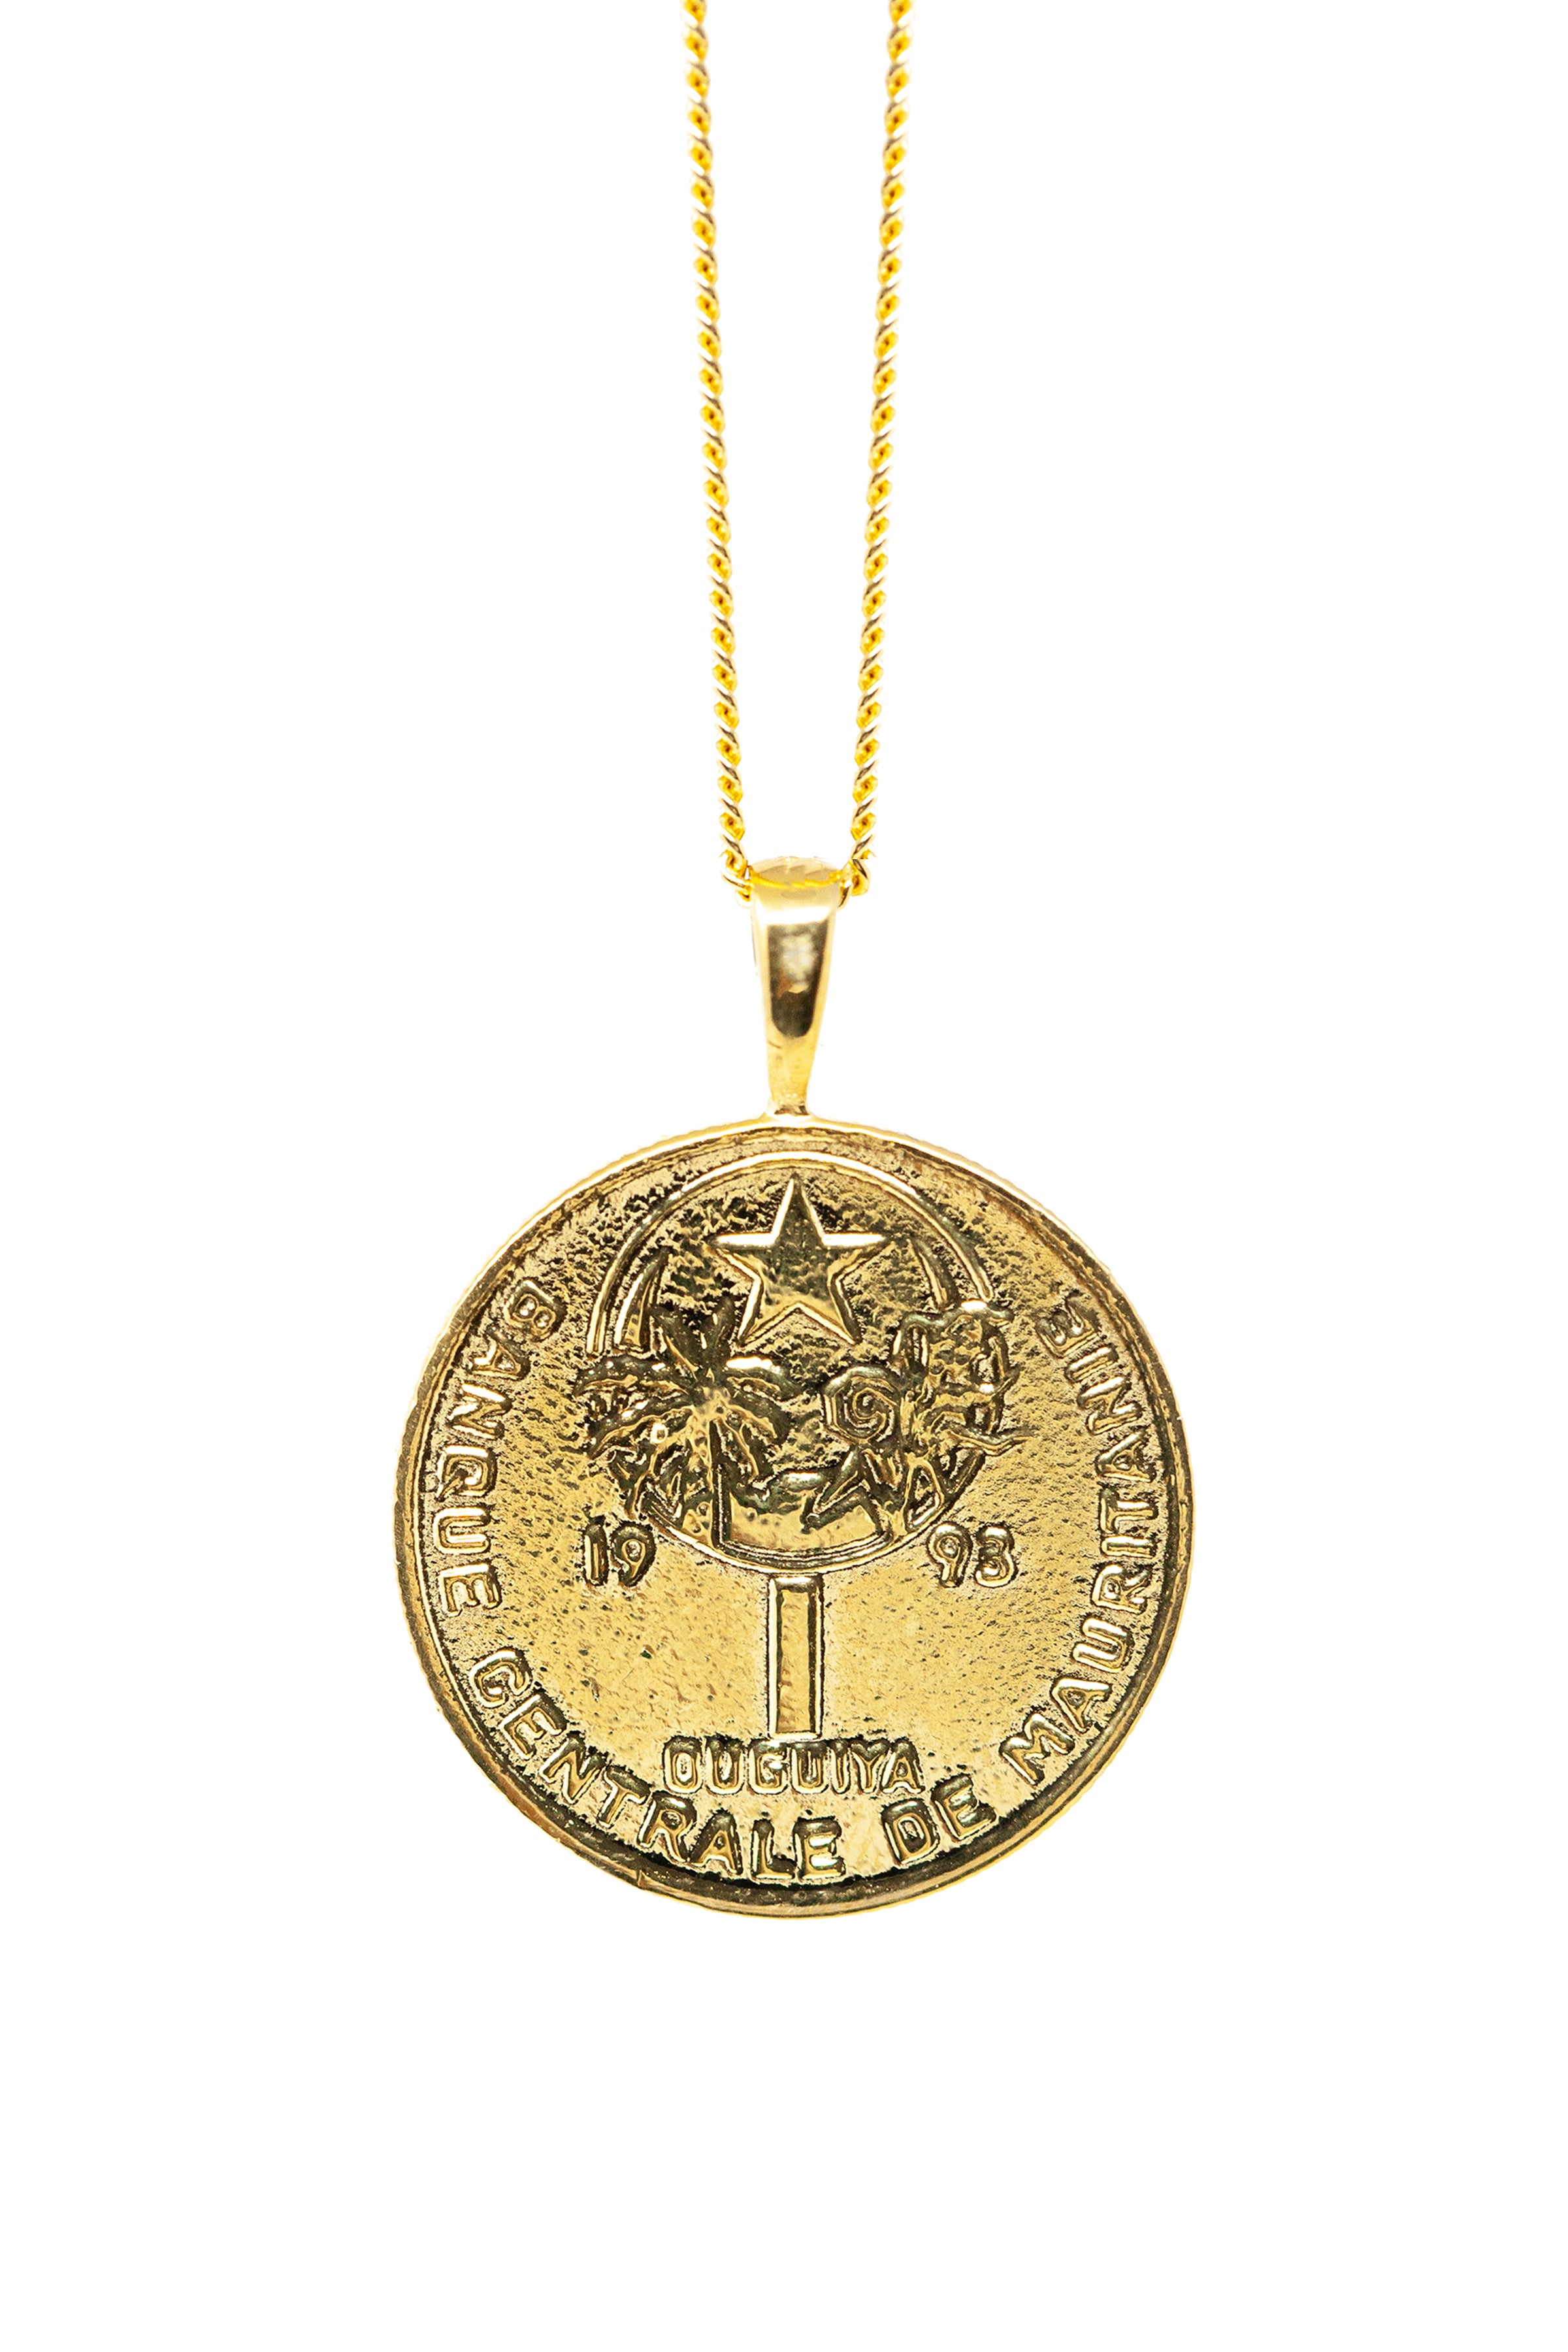 THE MAURITANIA Coin Necklace